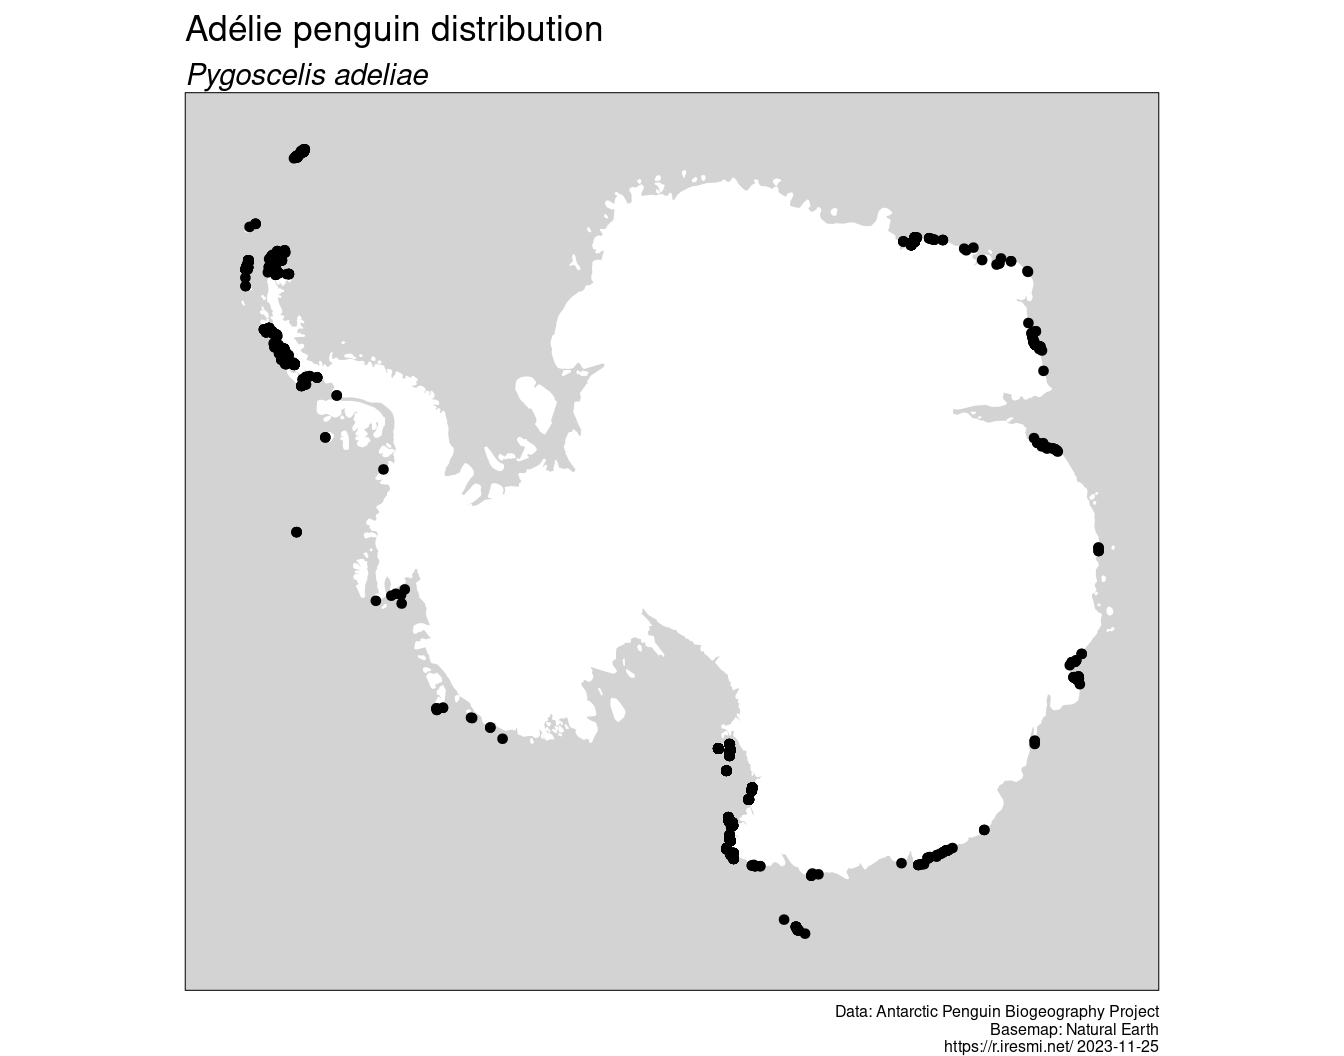 Map of the Adélie penguin distribution around Antarctica